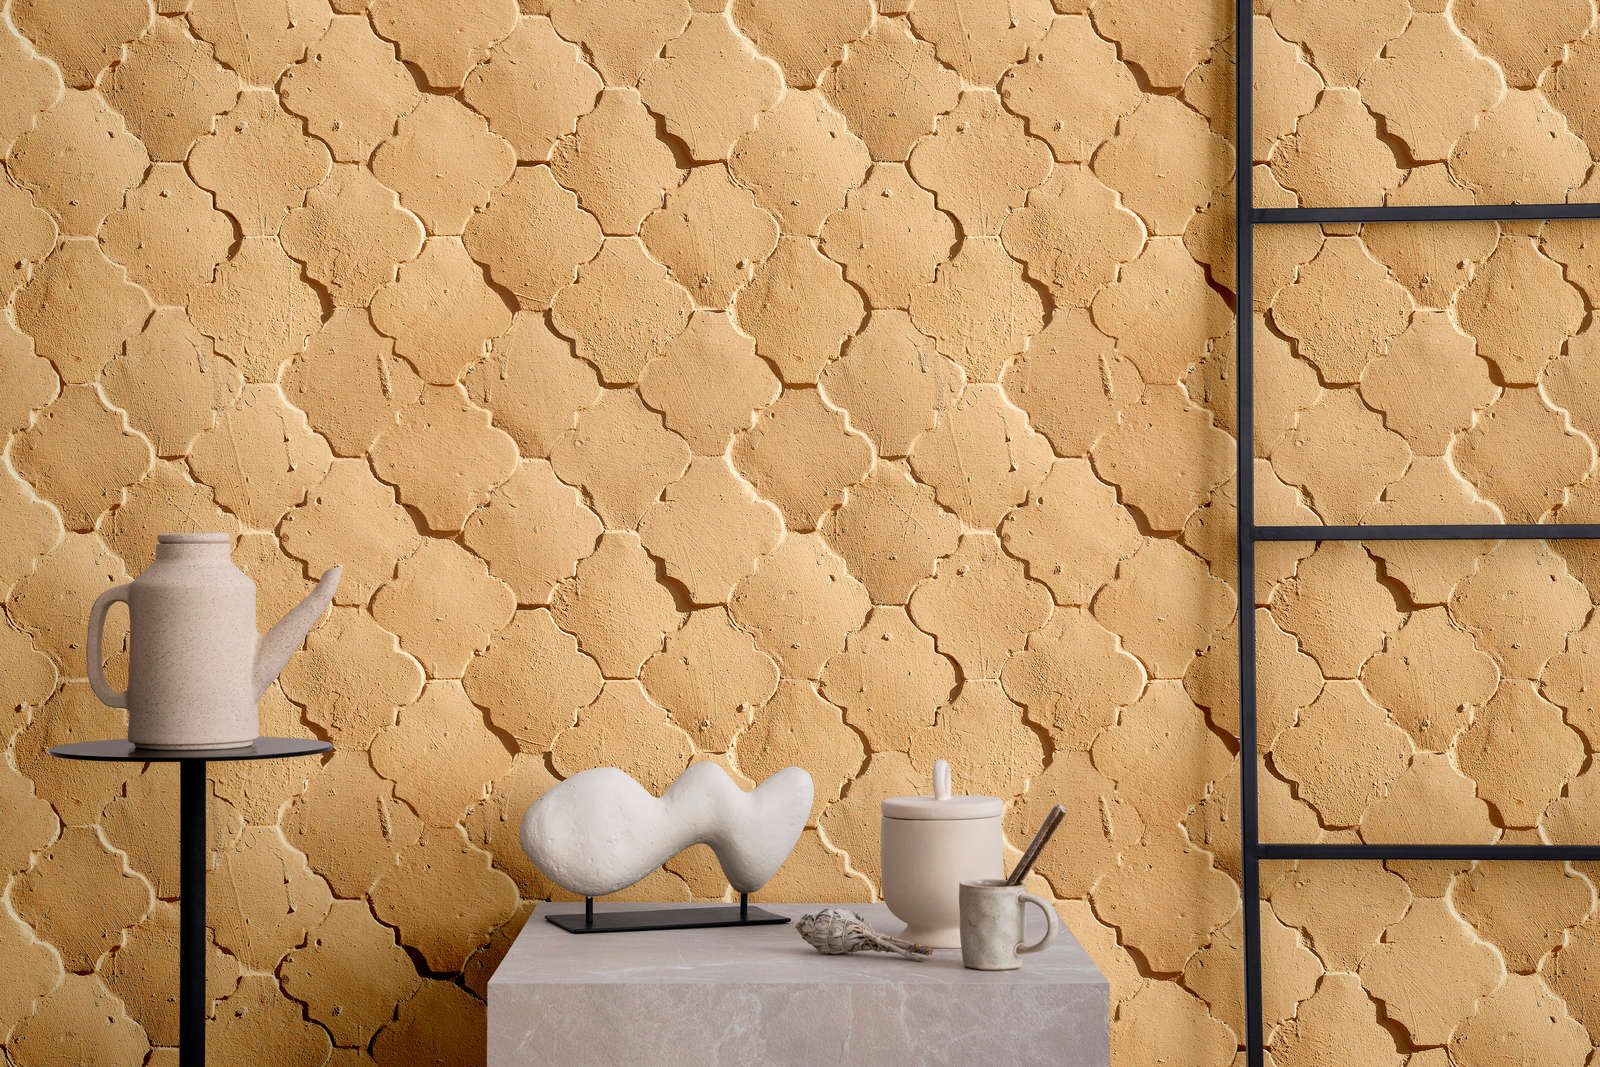             Digital behang »siena« - Mediterraan tegelpatroon in zandkleuren - Gladde, licht glanzende premium vliesstof
        